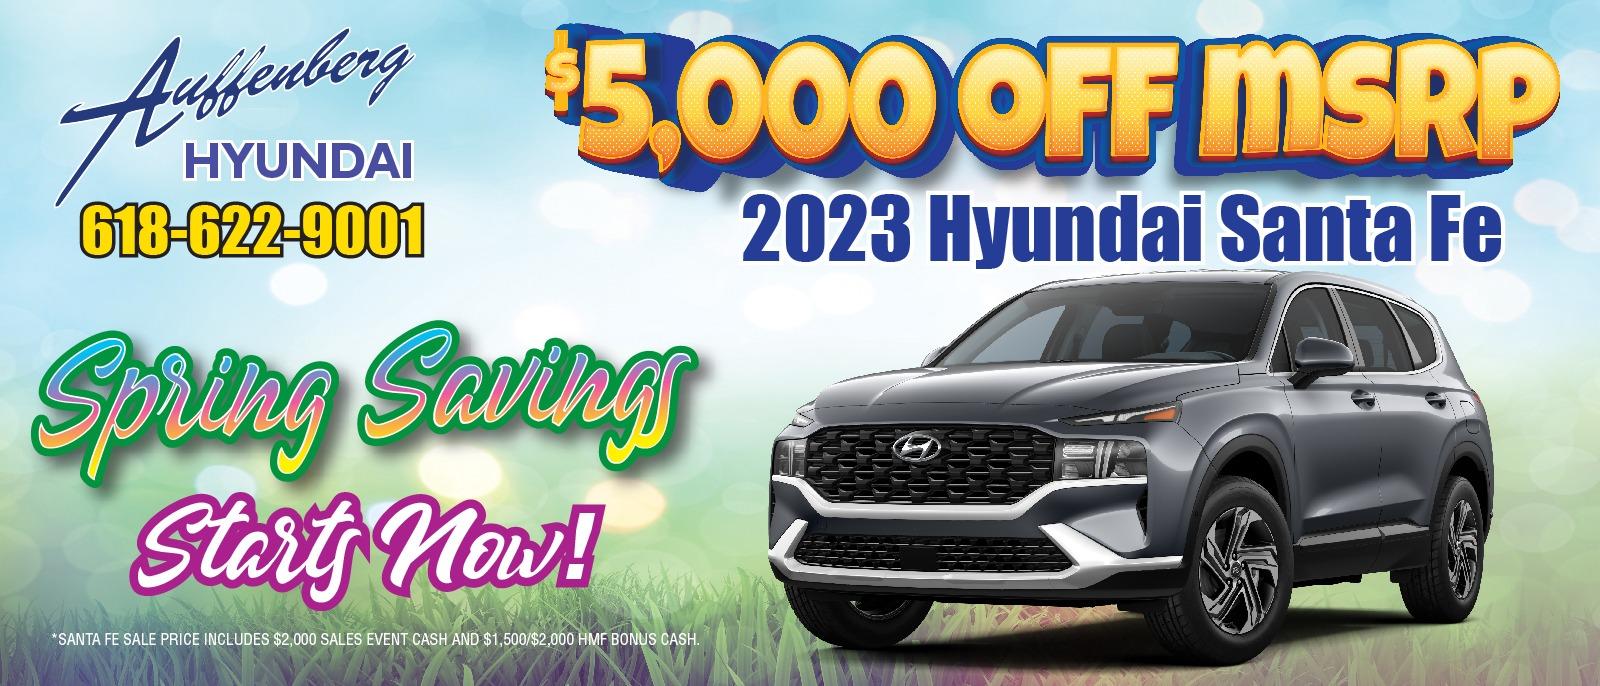 2023 Hyundai Santa Fe 
$5000 off